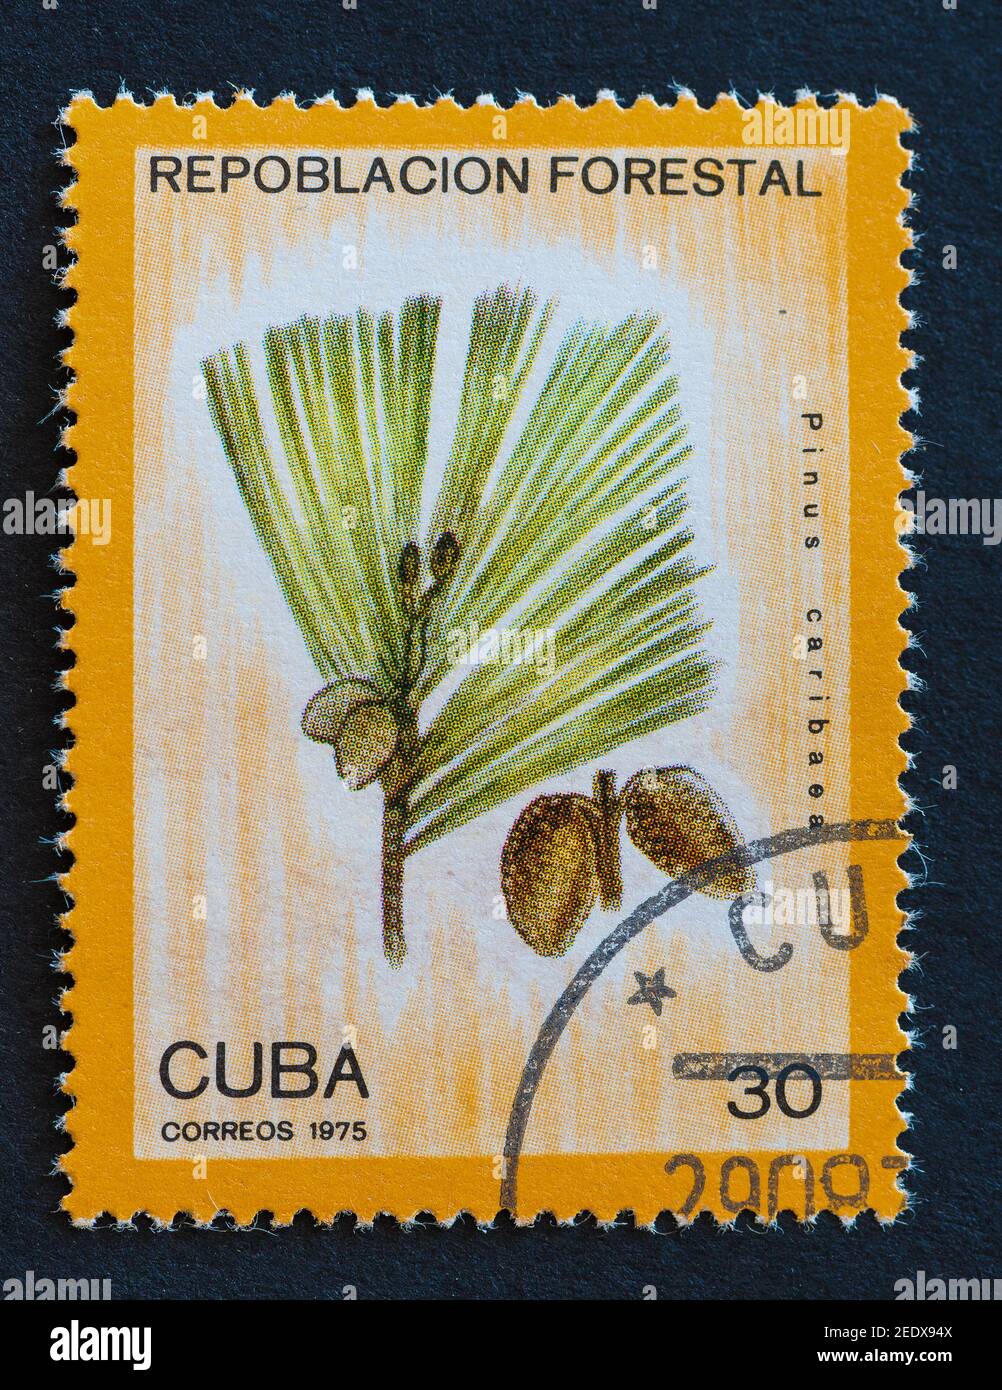 Old vintage Cuban postal stamps Stock Photo